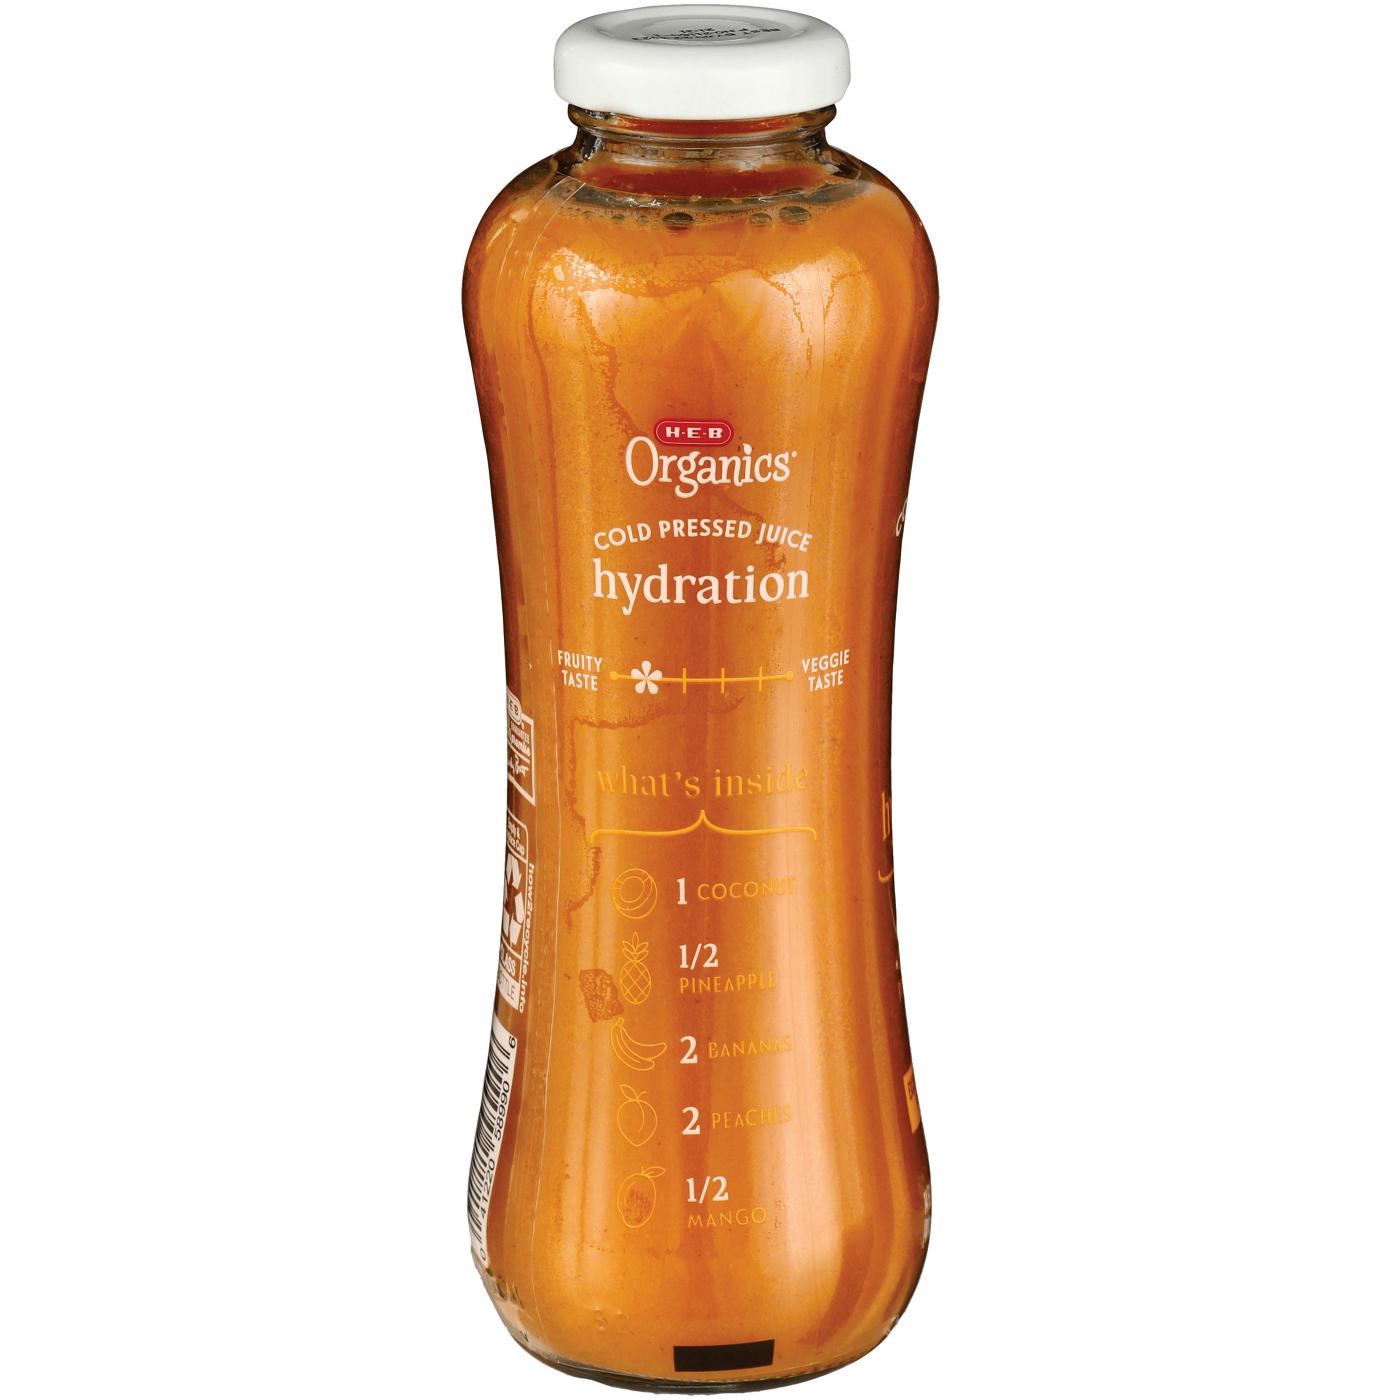 H-E-B Organics Hydration Cold Pressed Juice; image 1 of 2